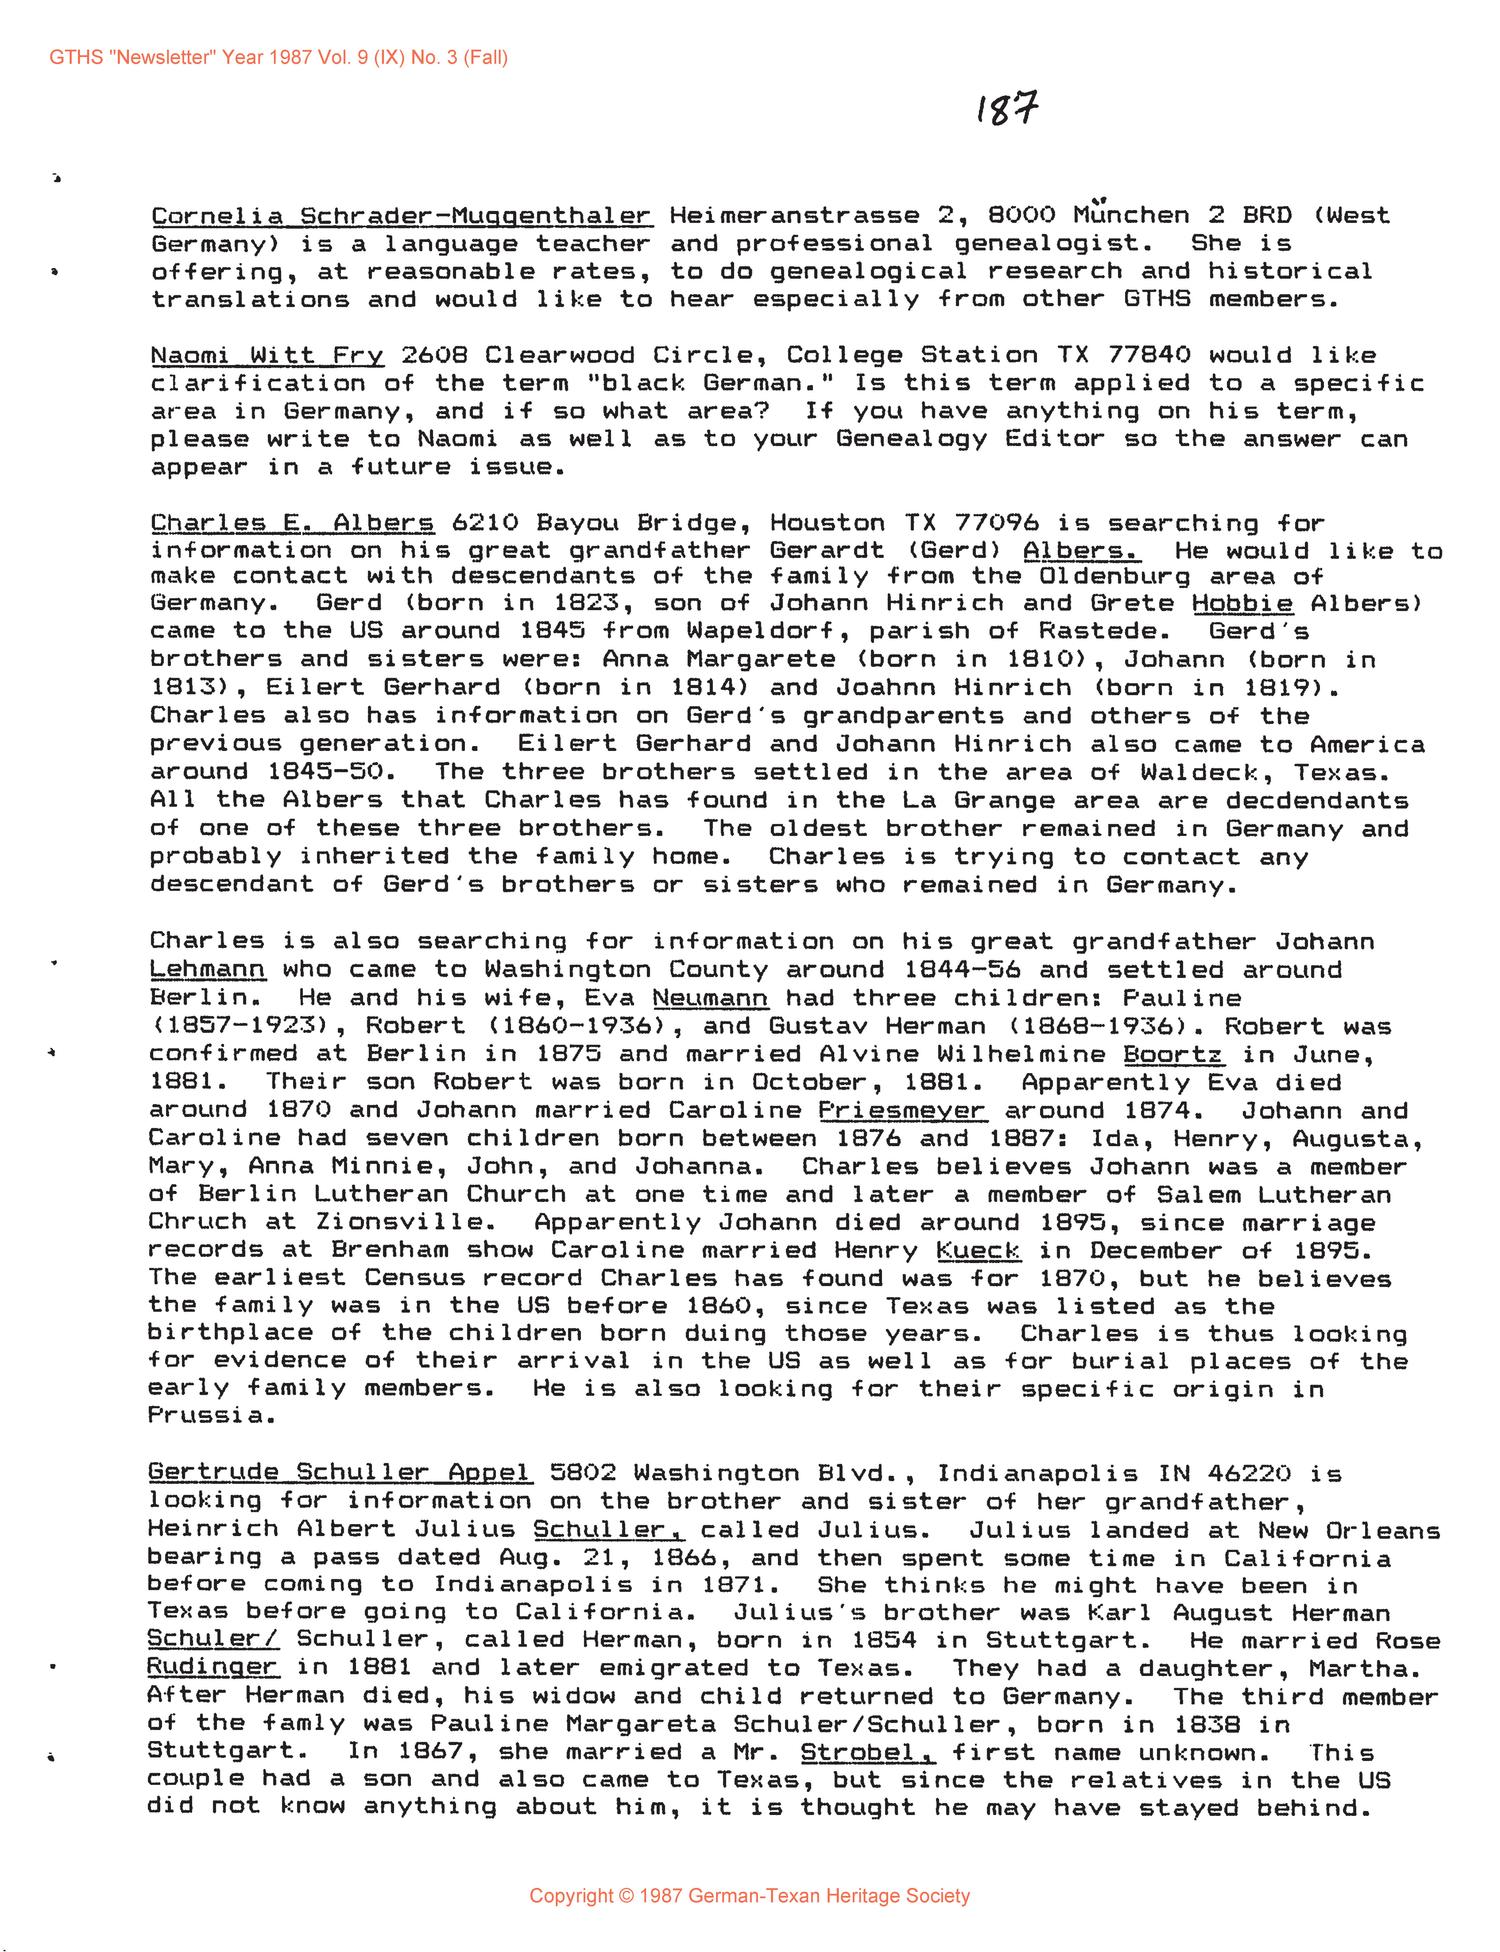 German-Texan Heritage Society Newsletter, Volume 9, Number 3, Fall 1987
                                                
                                                    187
                                                